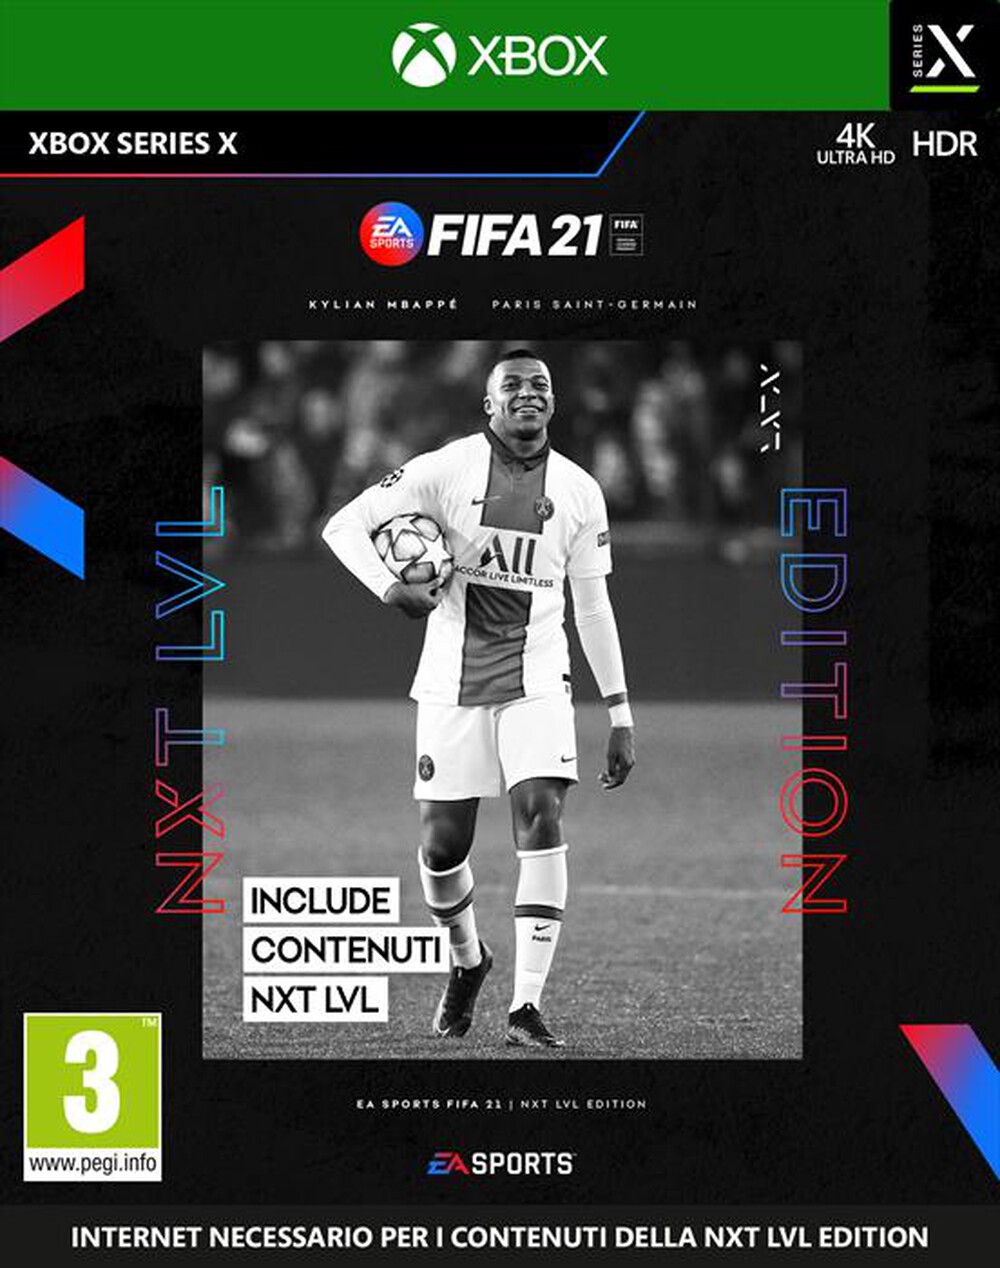 "ELECTRONIC ARTS - FIFA 21 NEXT LEVEL EDITION XBOX SX"